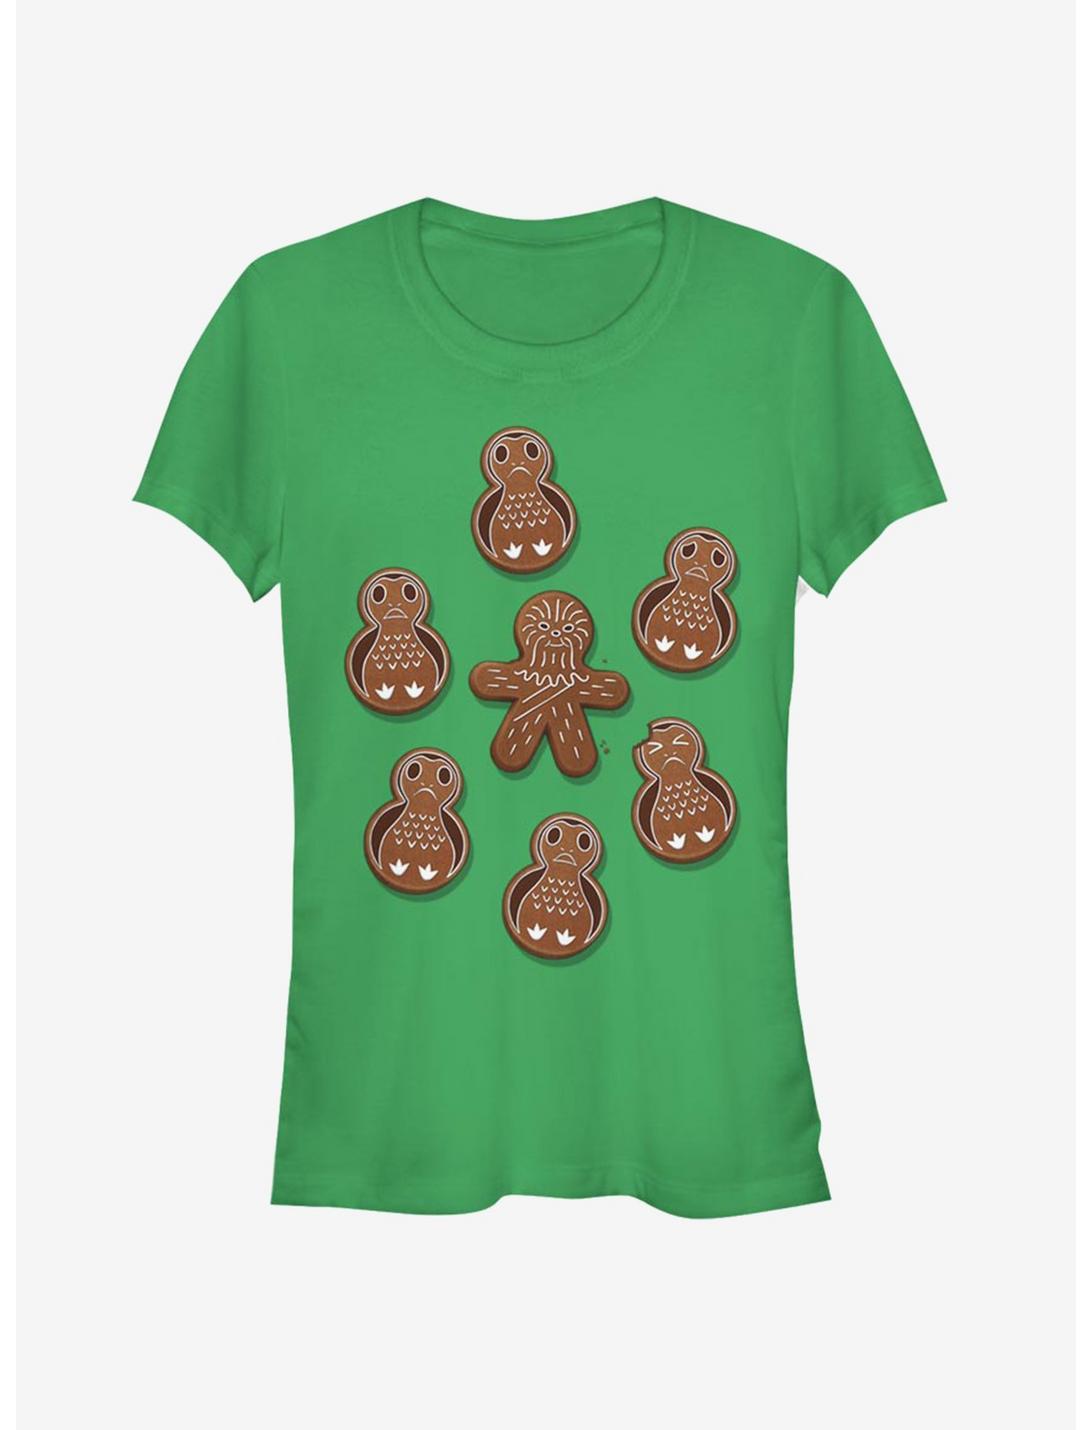 Star Wars Gingerman Porg Christmas Cookies Girls T-Shirt, KELLY, hi-res